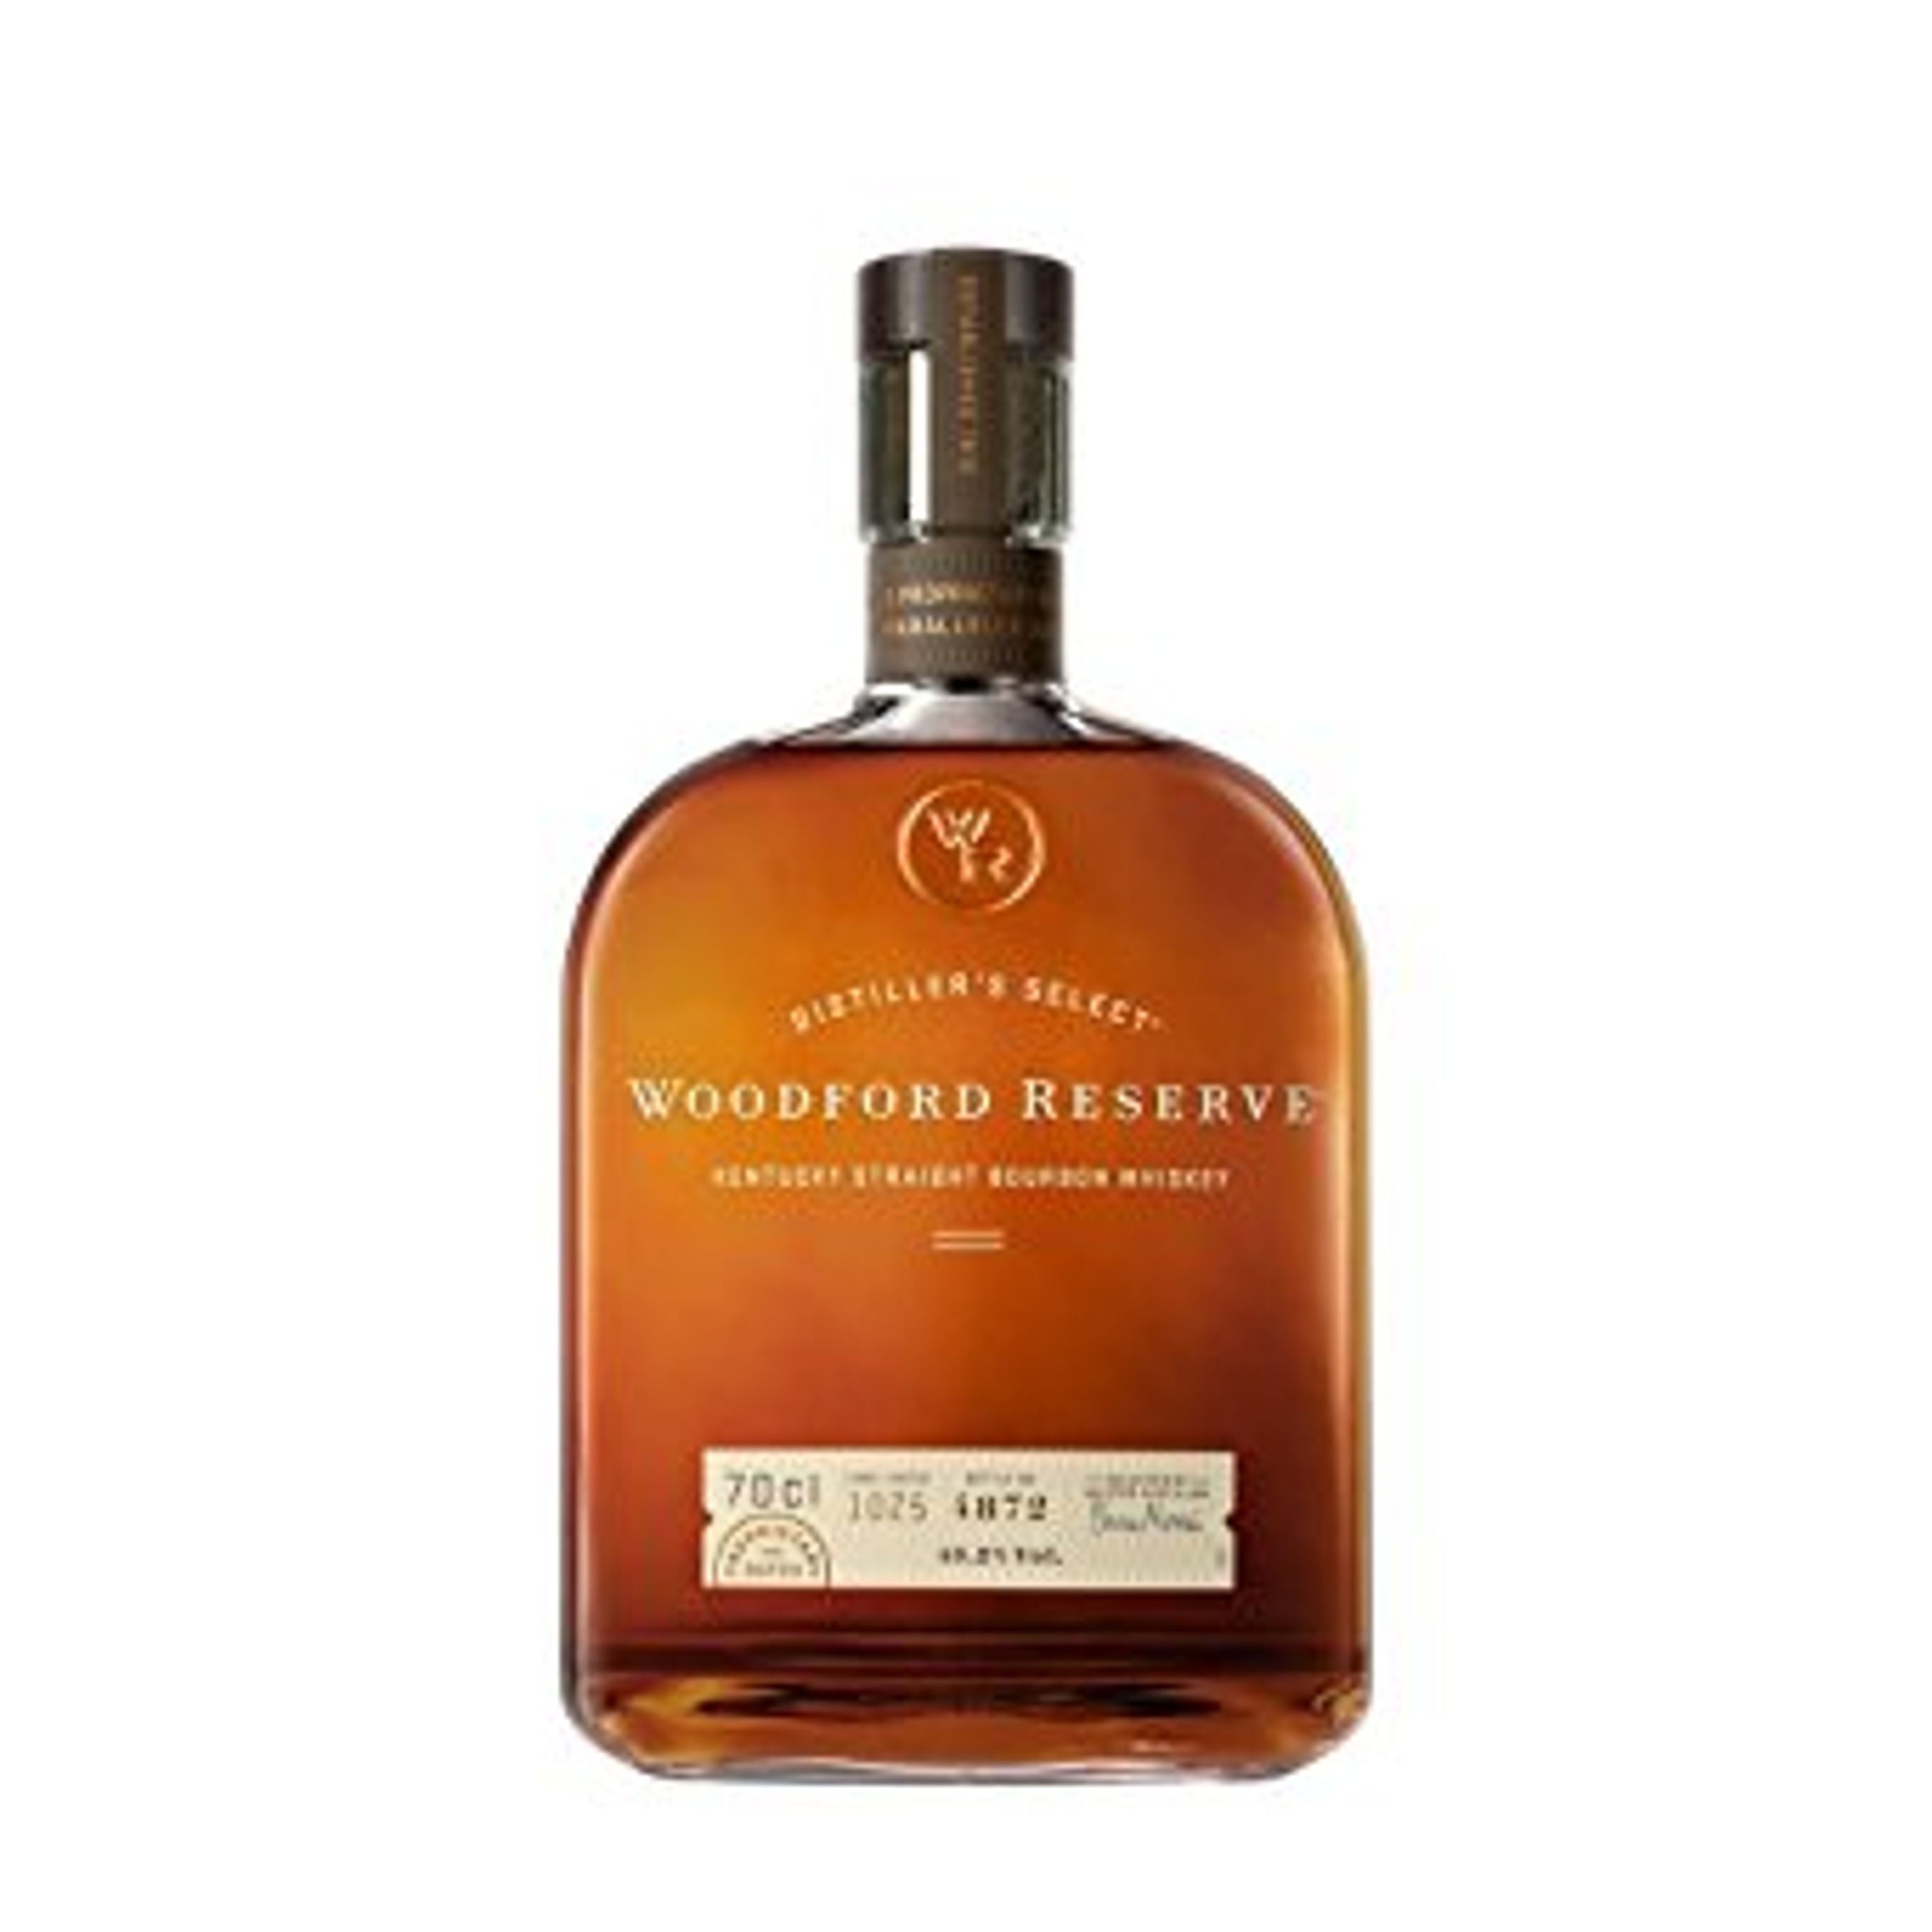 Woodford Reserve Kentucky Straight Bourbon Whisky 0,7l, alk. 43,2 tilavuusprosenttia.